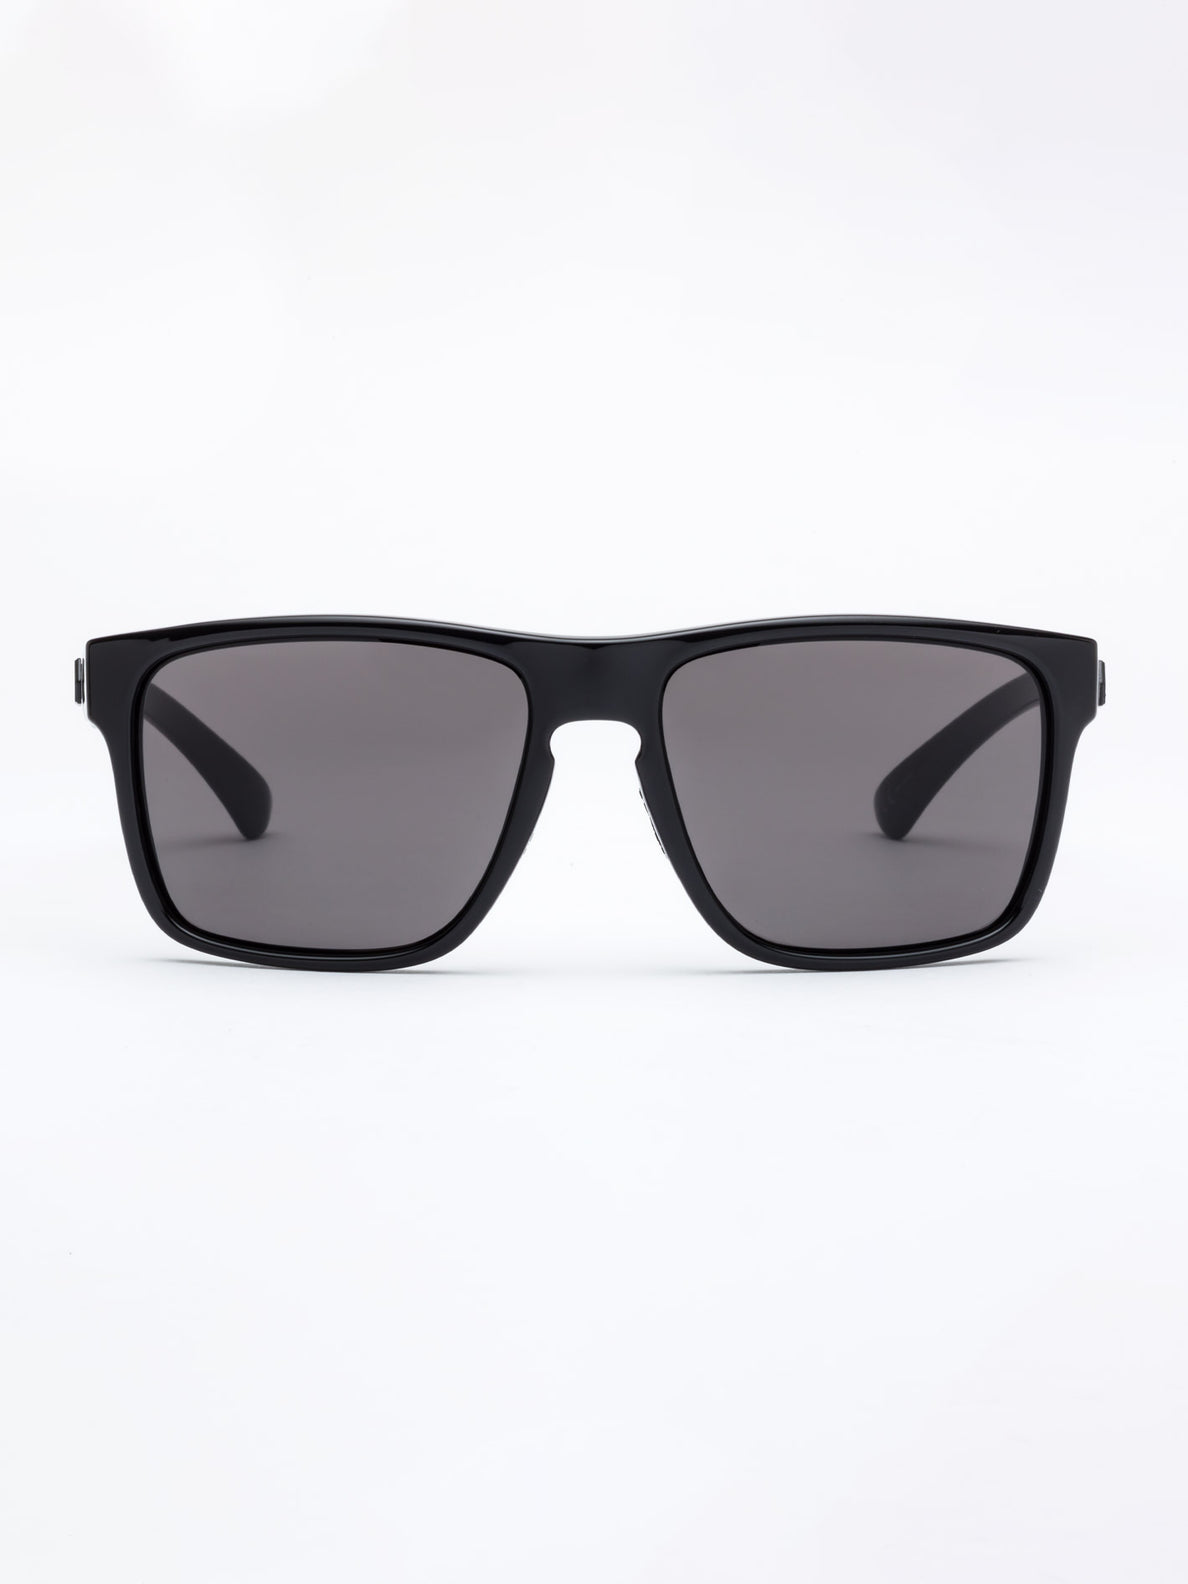 Trick Sunglasses - Gloss Black Grey